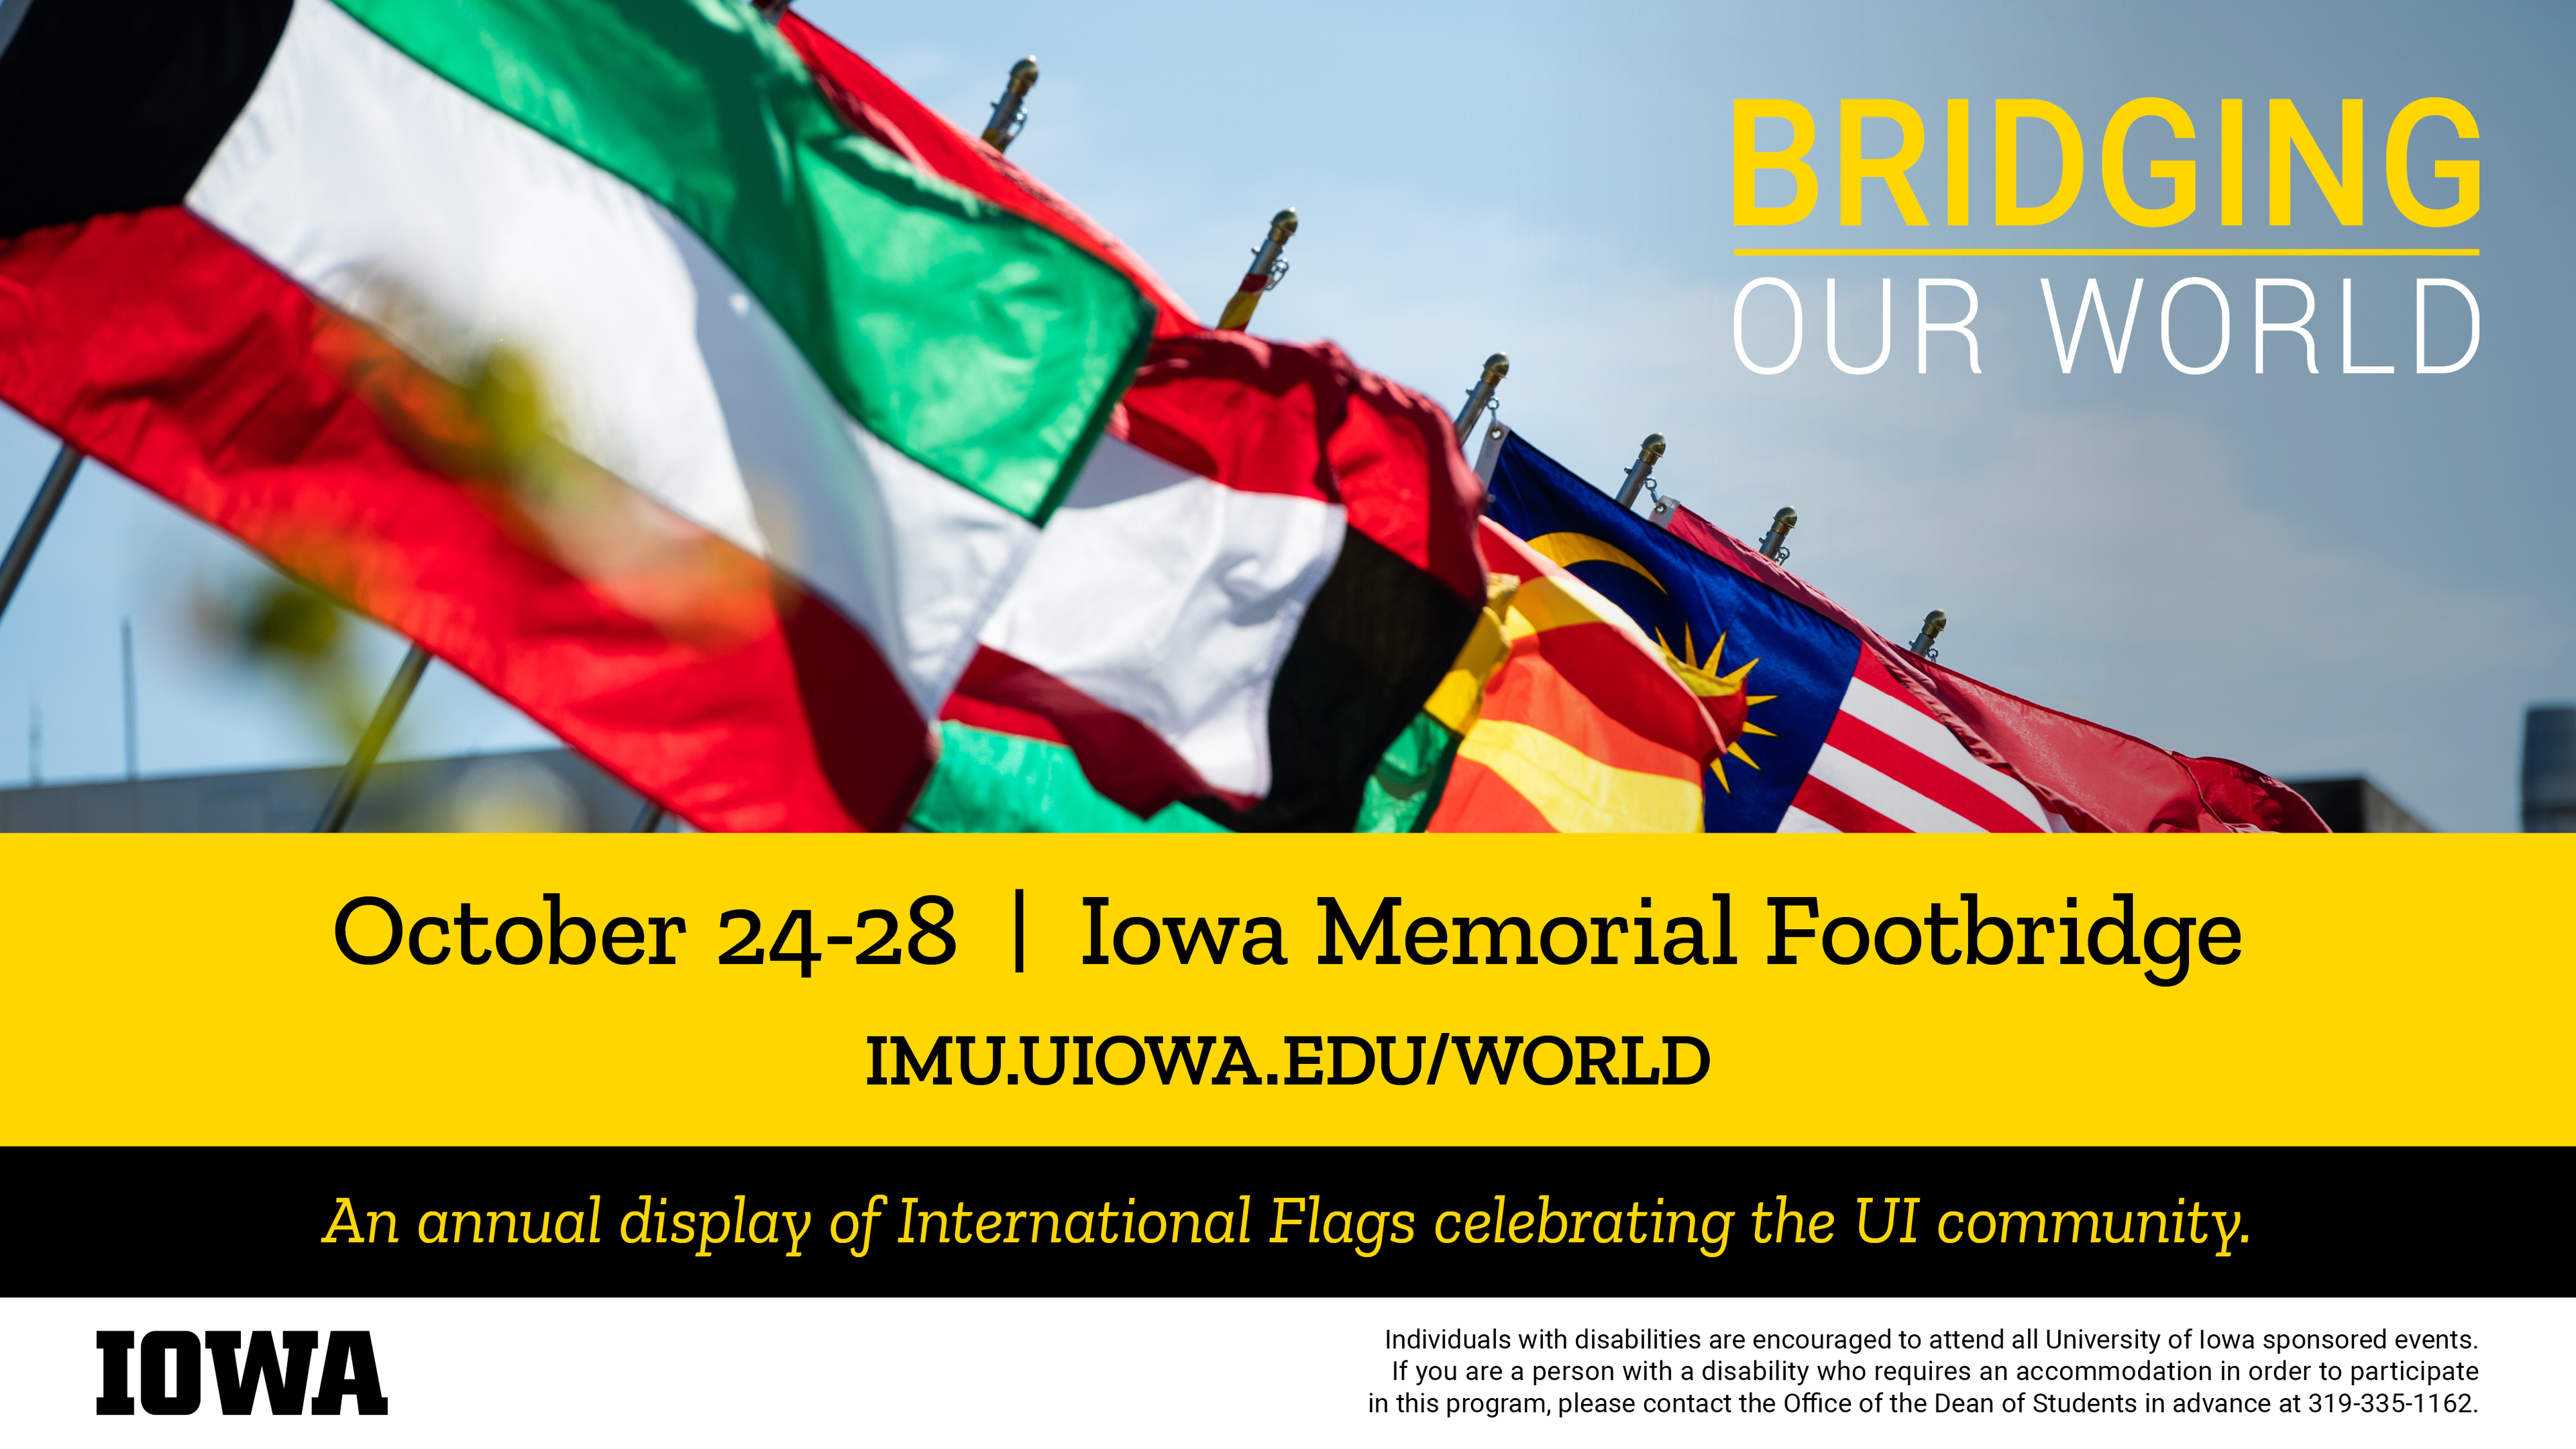 Bridging Our World October 24-28 at the Iowa Memorial Footbridge. Learn more at imu.uiowa.edu/world